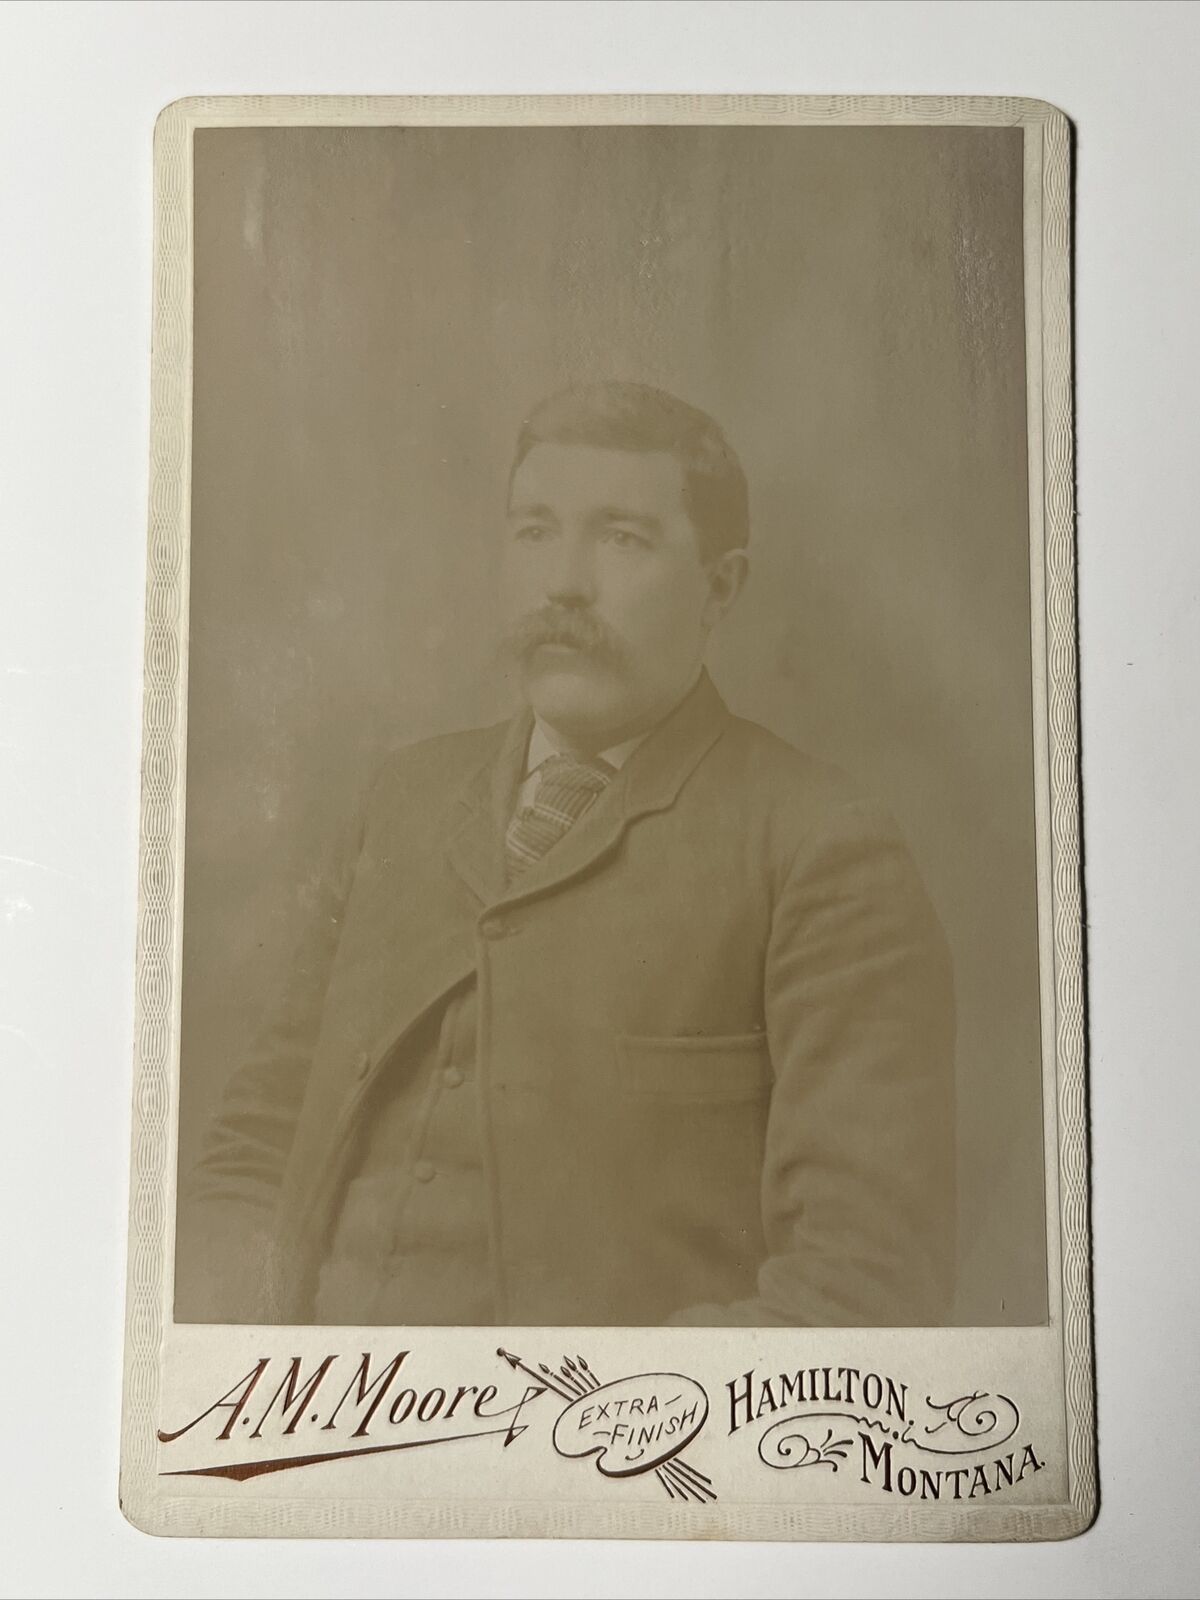 1880s HAMILTON MONTANA Man with Mustache antique Cabinet Card Photo